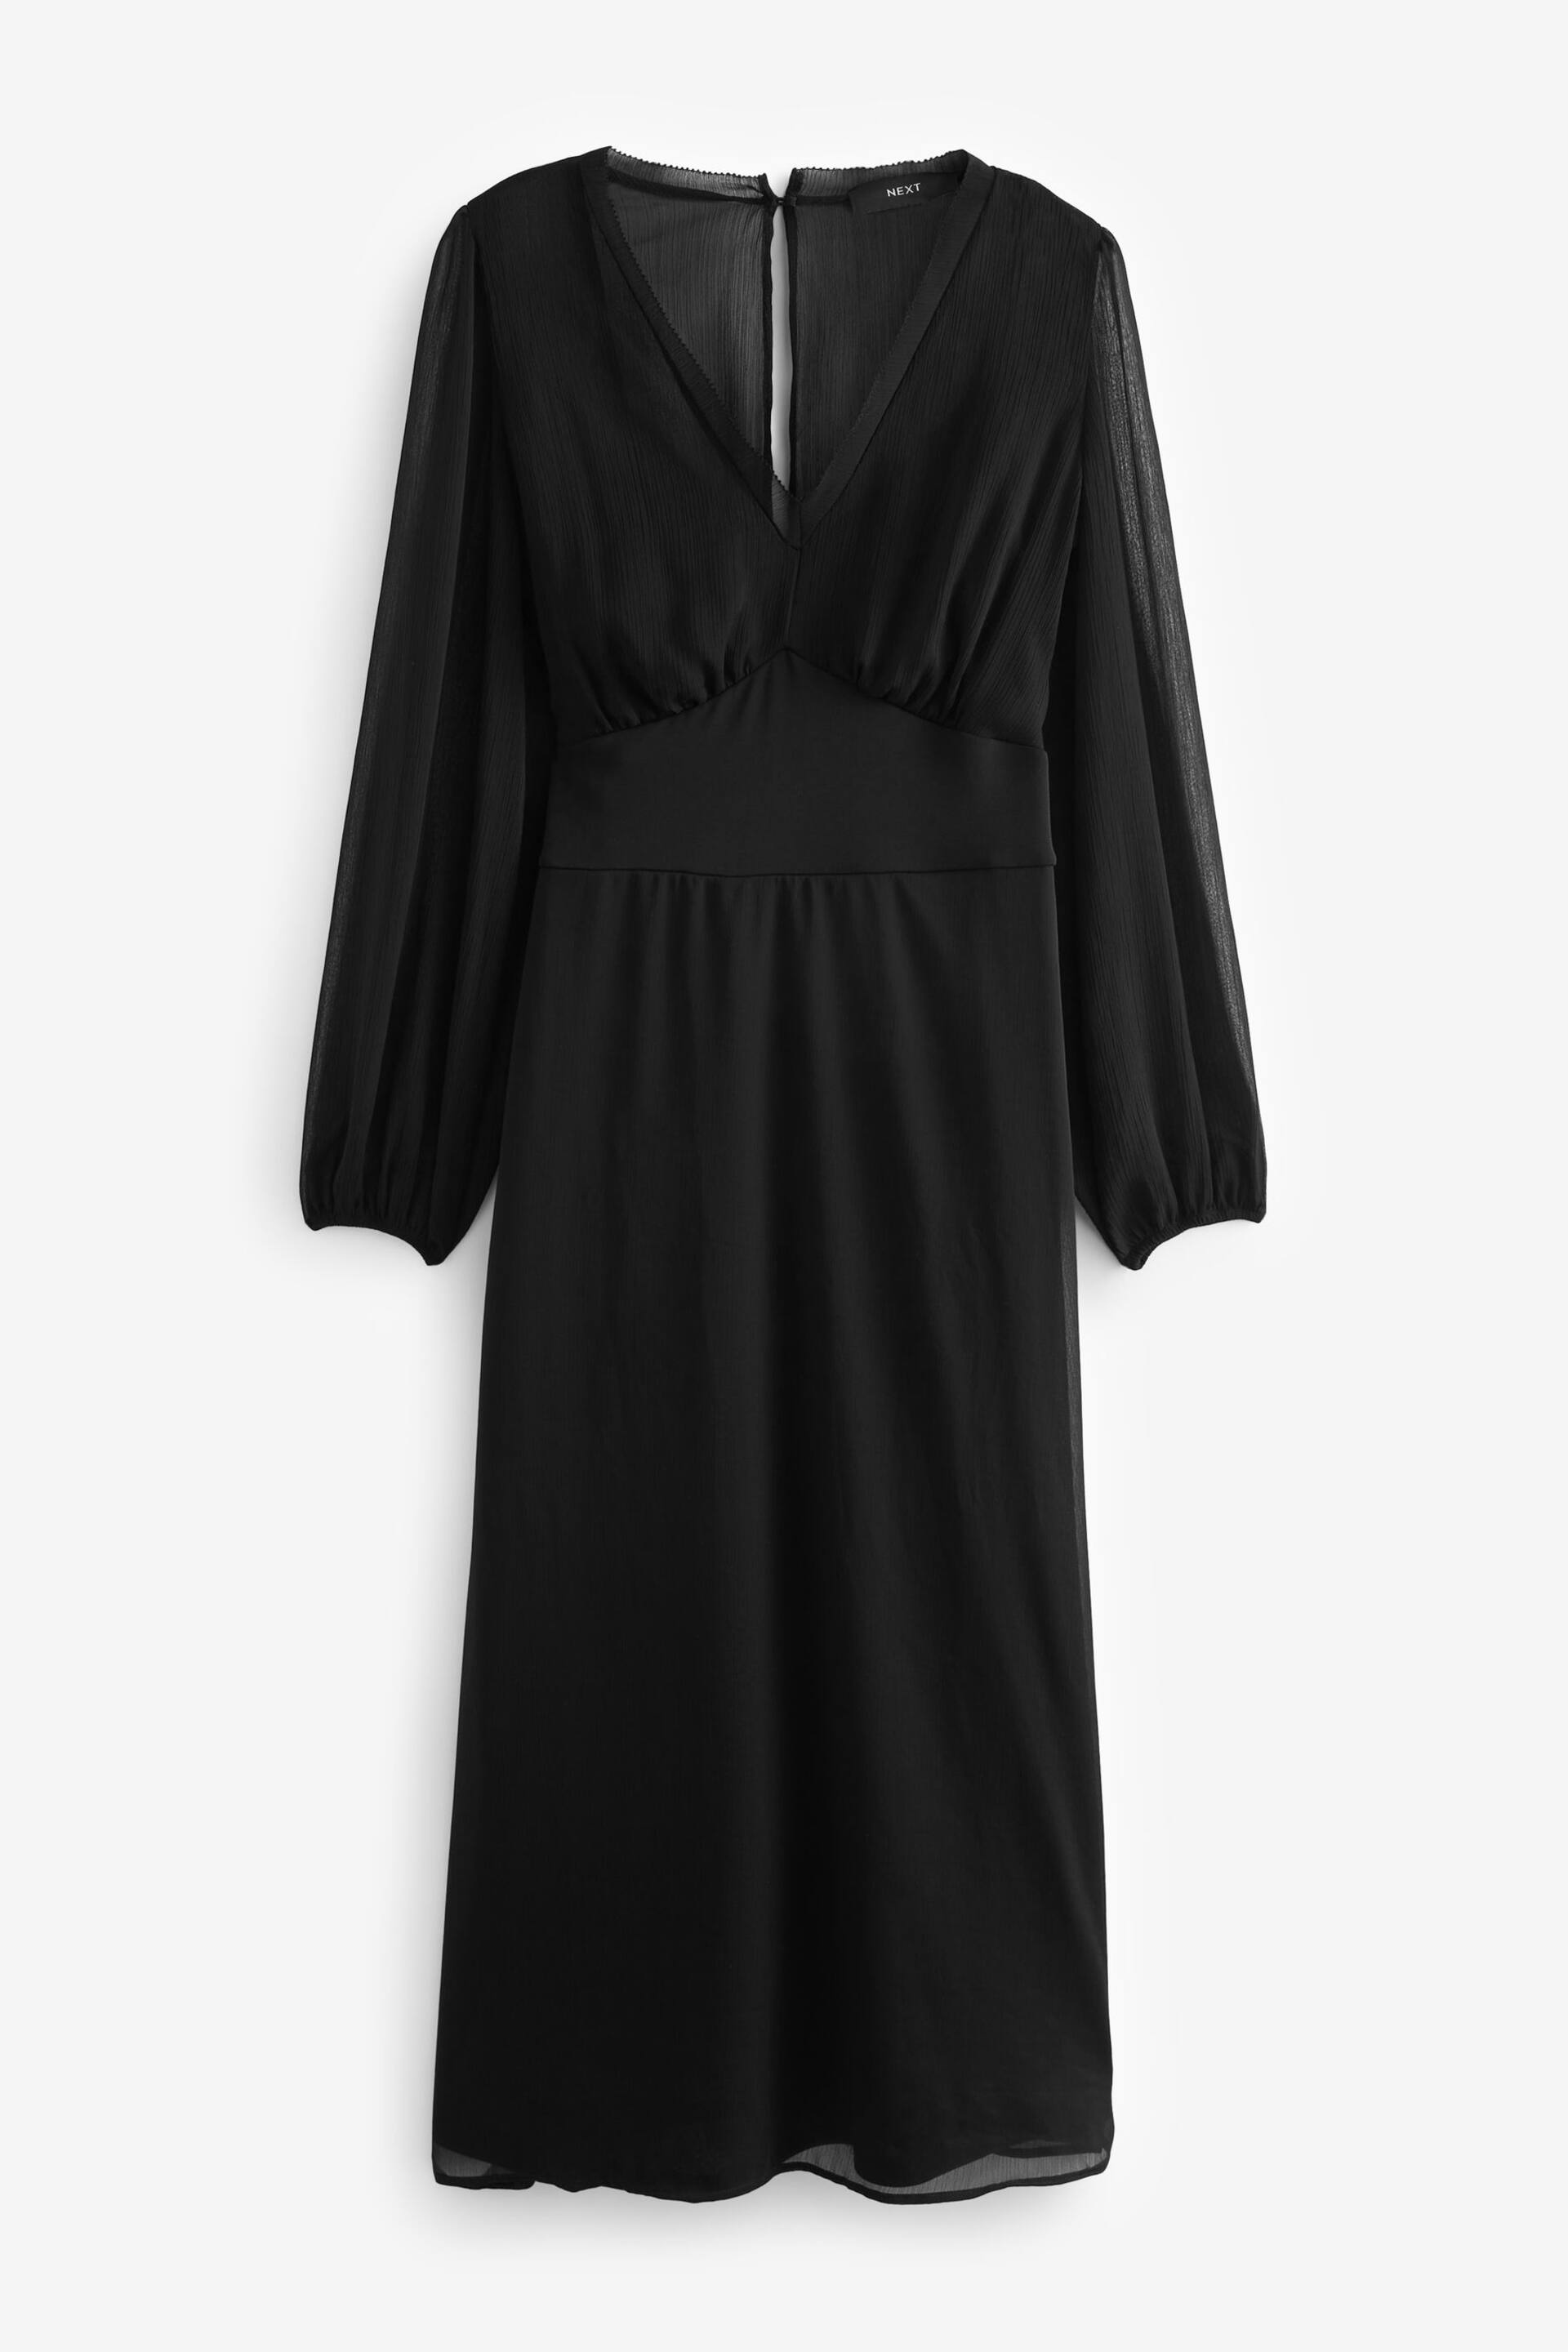 Black Long Sleeve Sheer Layer Midi Dress - Image 5 of 6